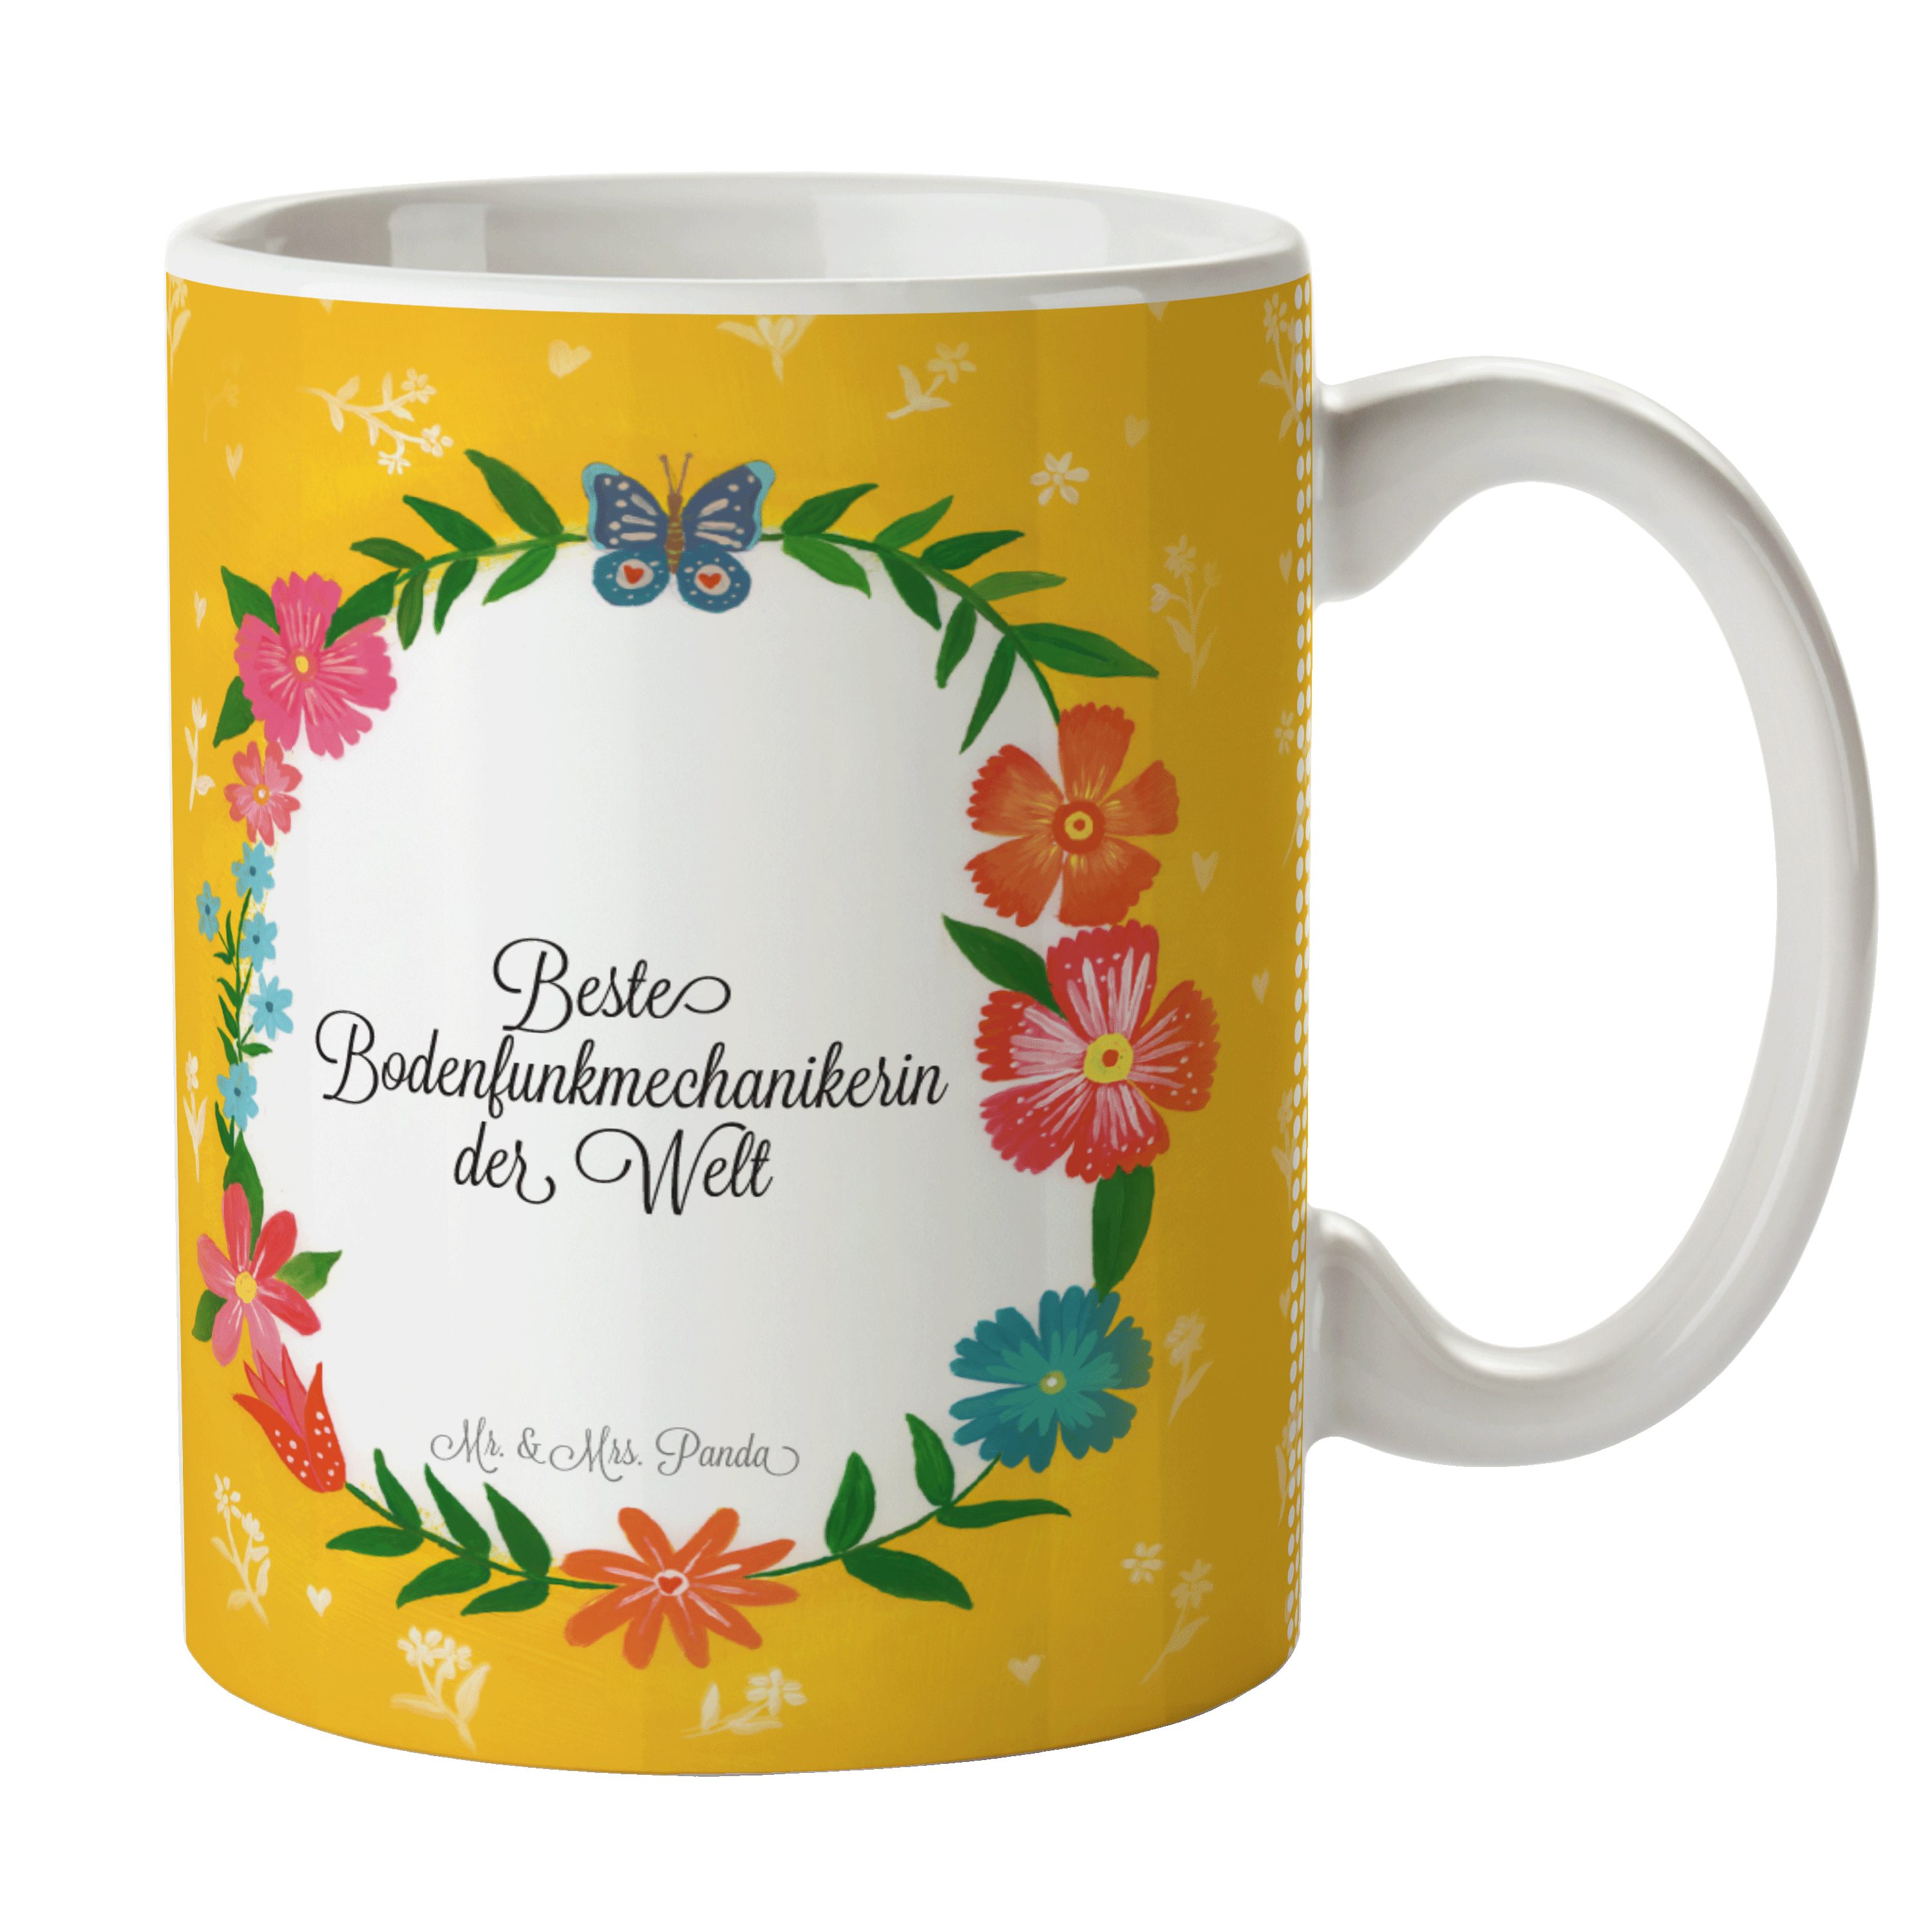 Schnäppchen Mr. & Mrs. Panda Tasse Kaffeebecher, Keramik - Teebeche, Geschenk, Gratulation, Bodenfunkmechanikerin